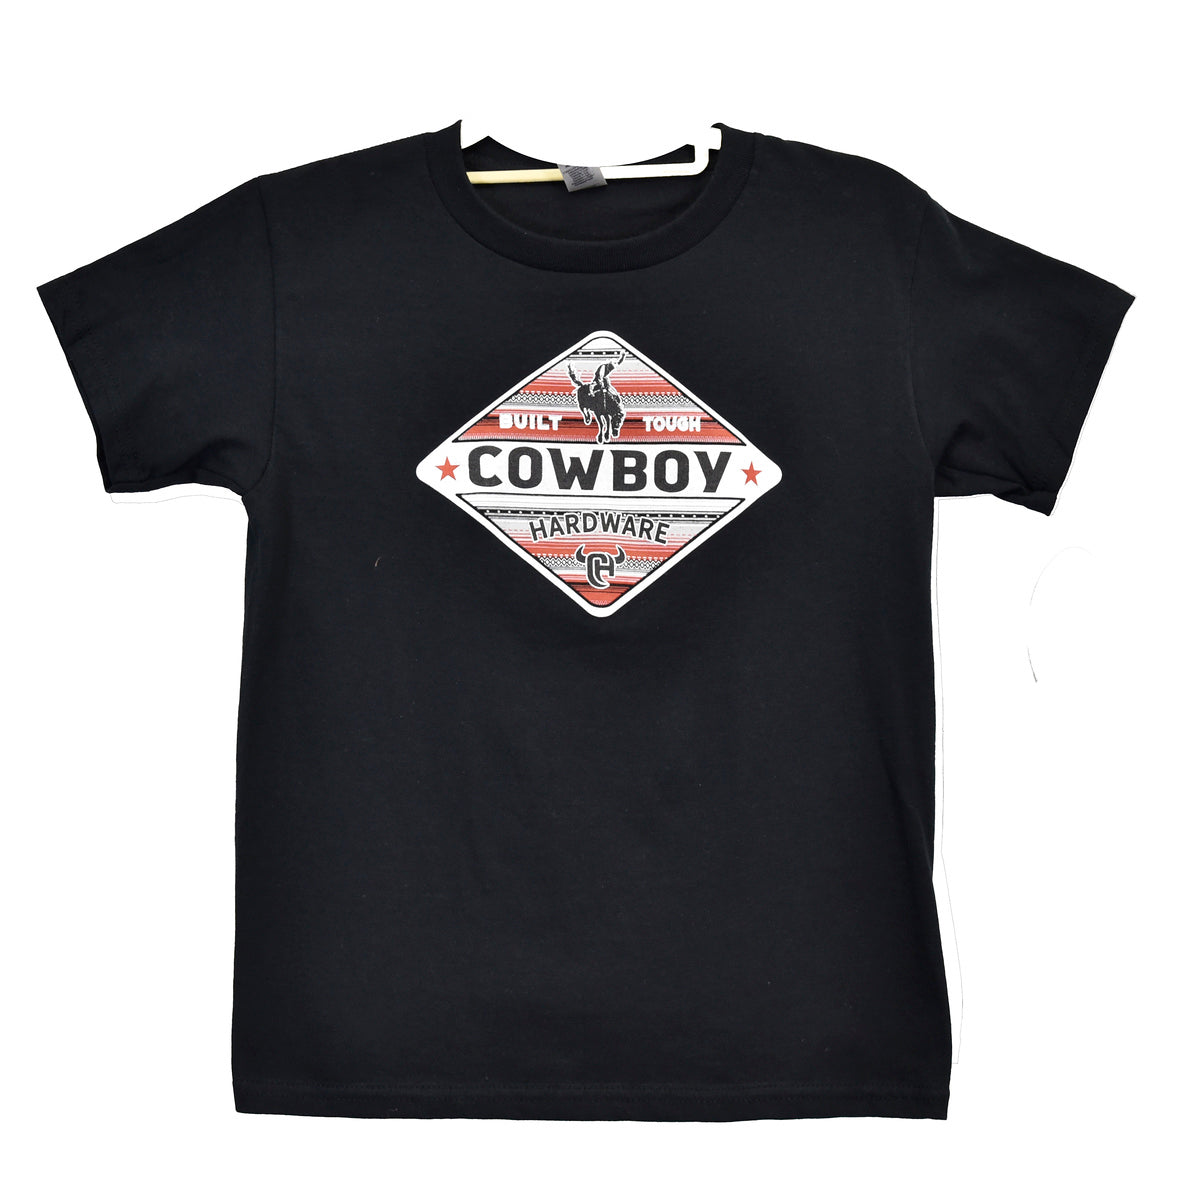 Cowboy Hardware 'Built Tough' T-Shirt